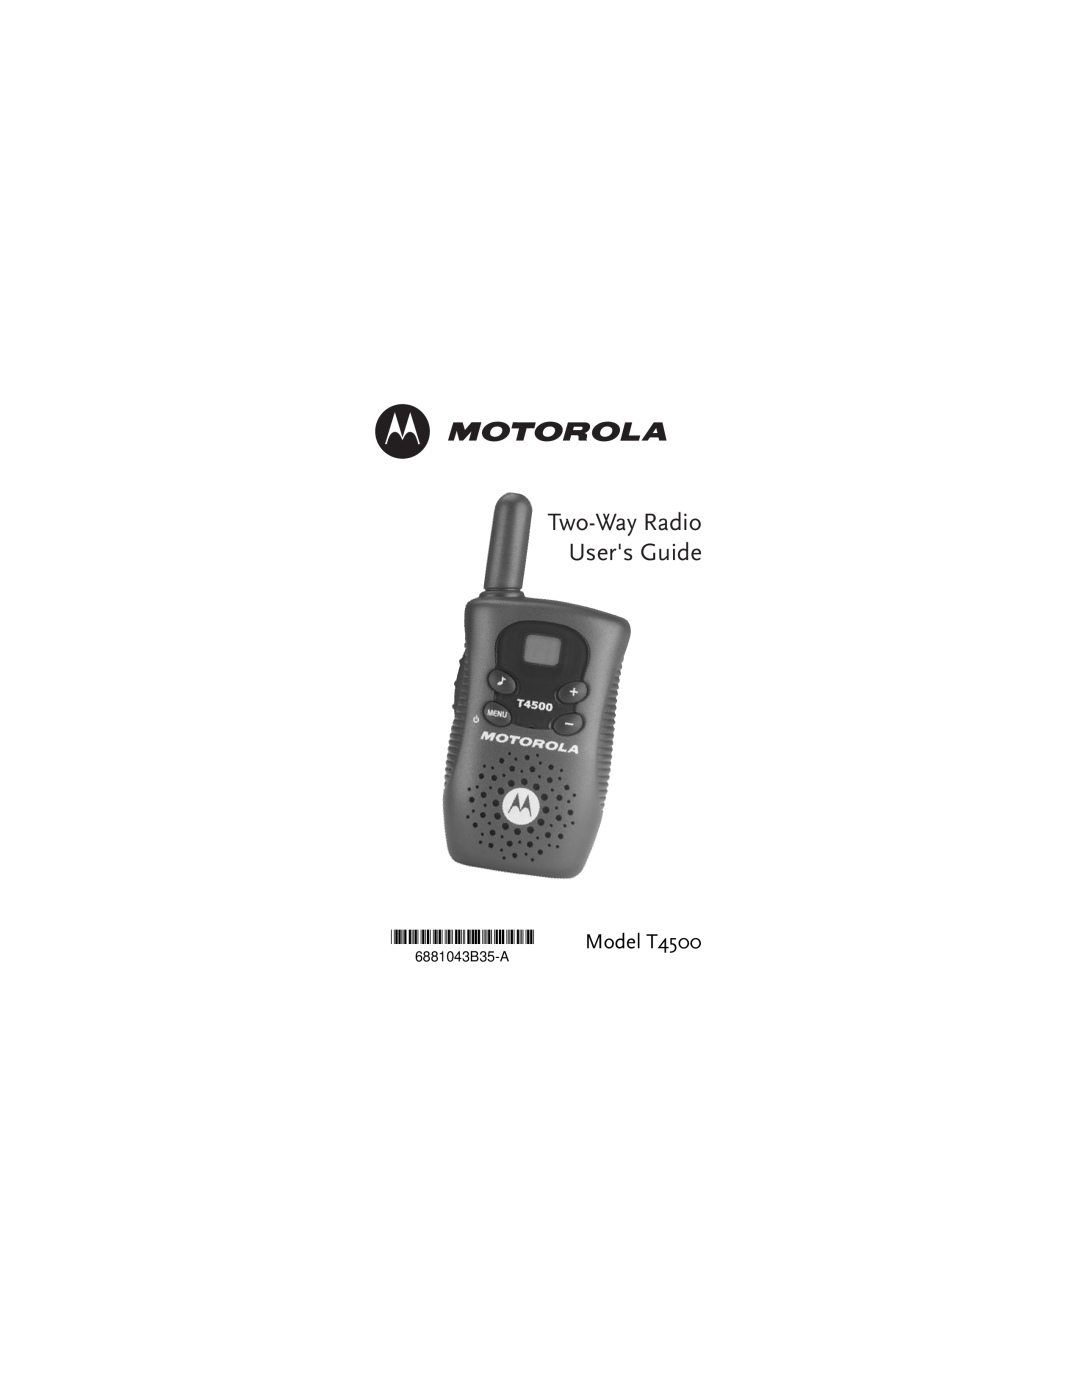 Motorola manual Two-Way Radio Users Guide, @6881043B35@, Model T4500 